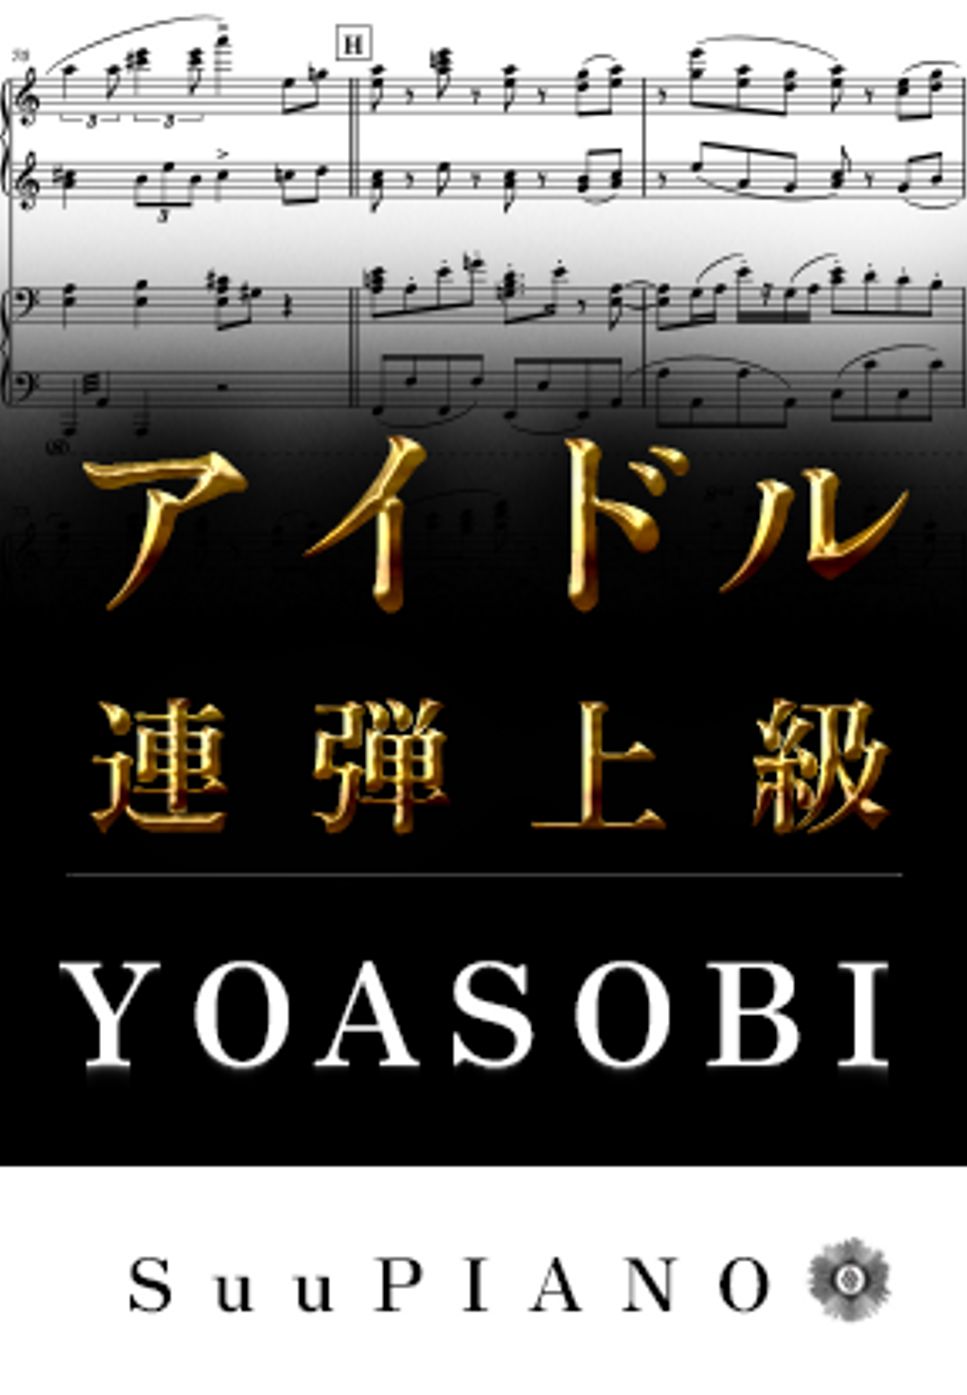 YOASOBI - アイドル (ピアノ連弾上級  / TVアニメ『【推しの子】』 OP) by Suu